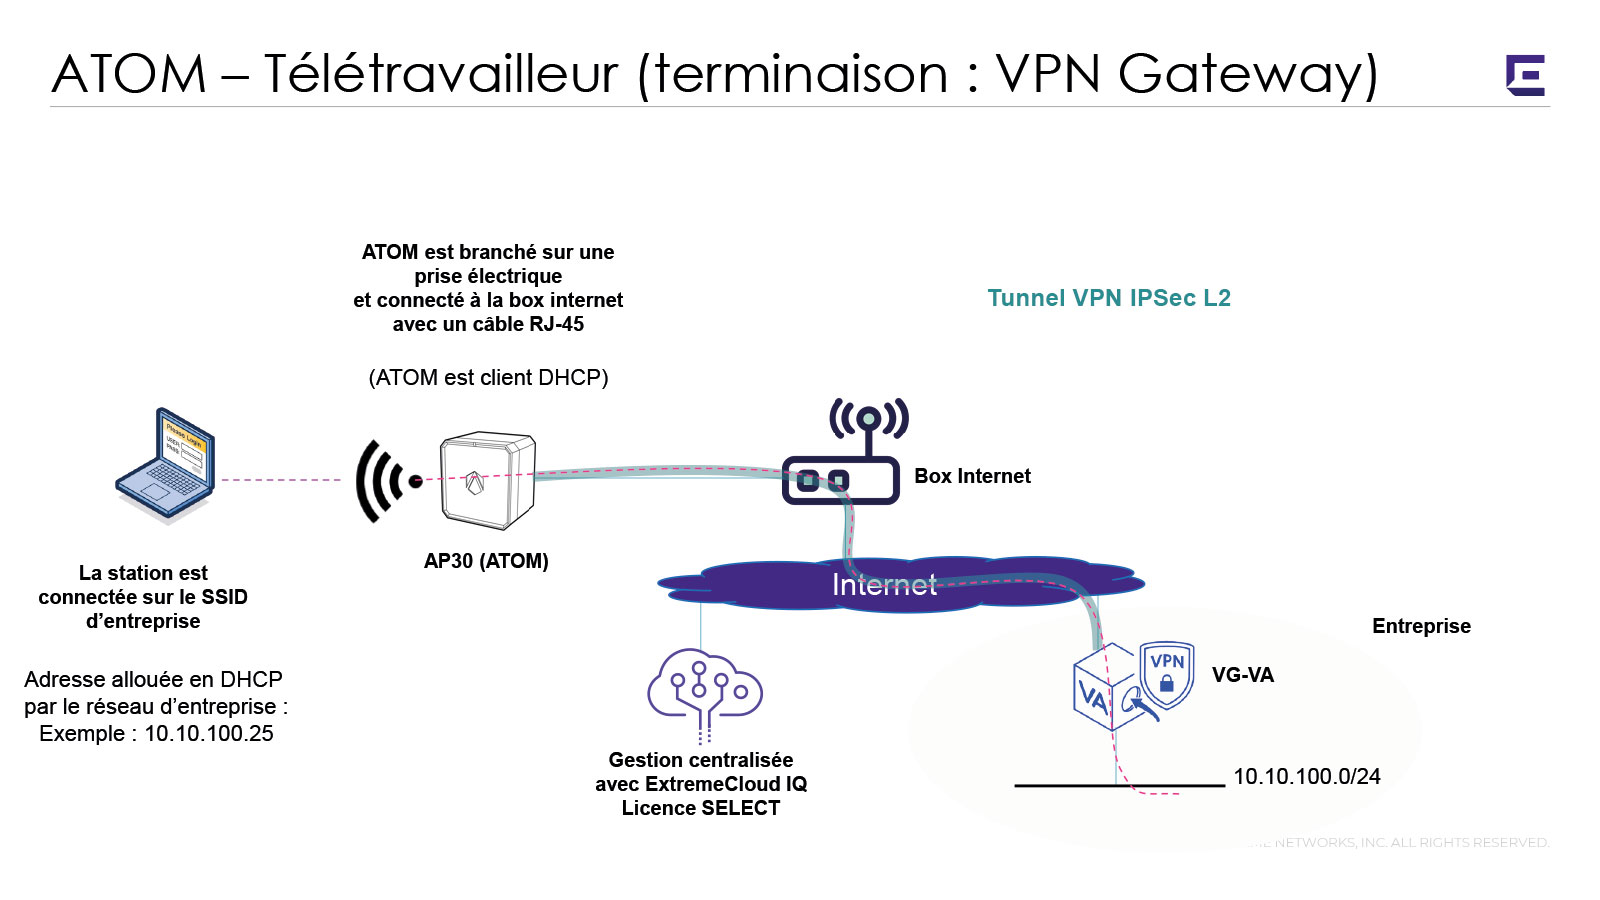   Collaboration   ATOM VPN Tltravailleur